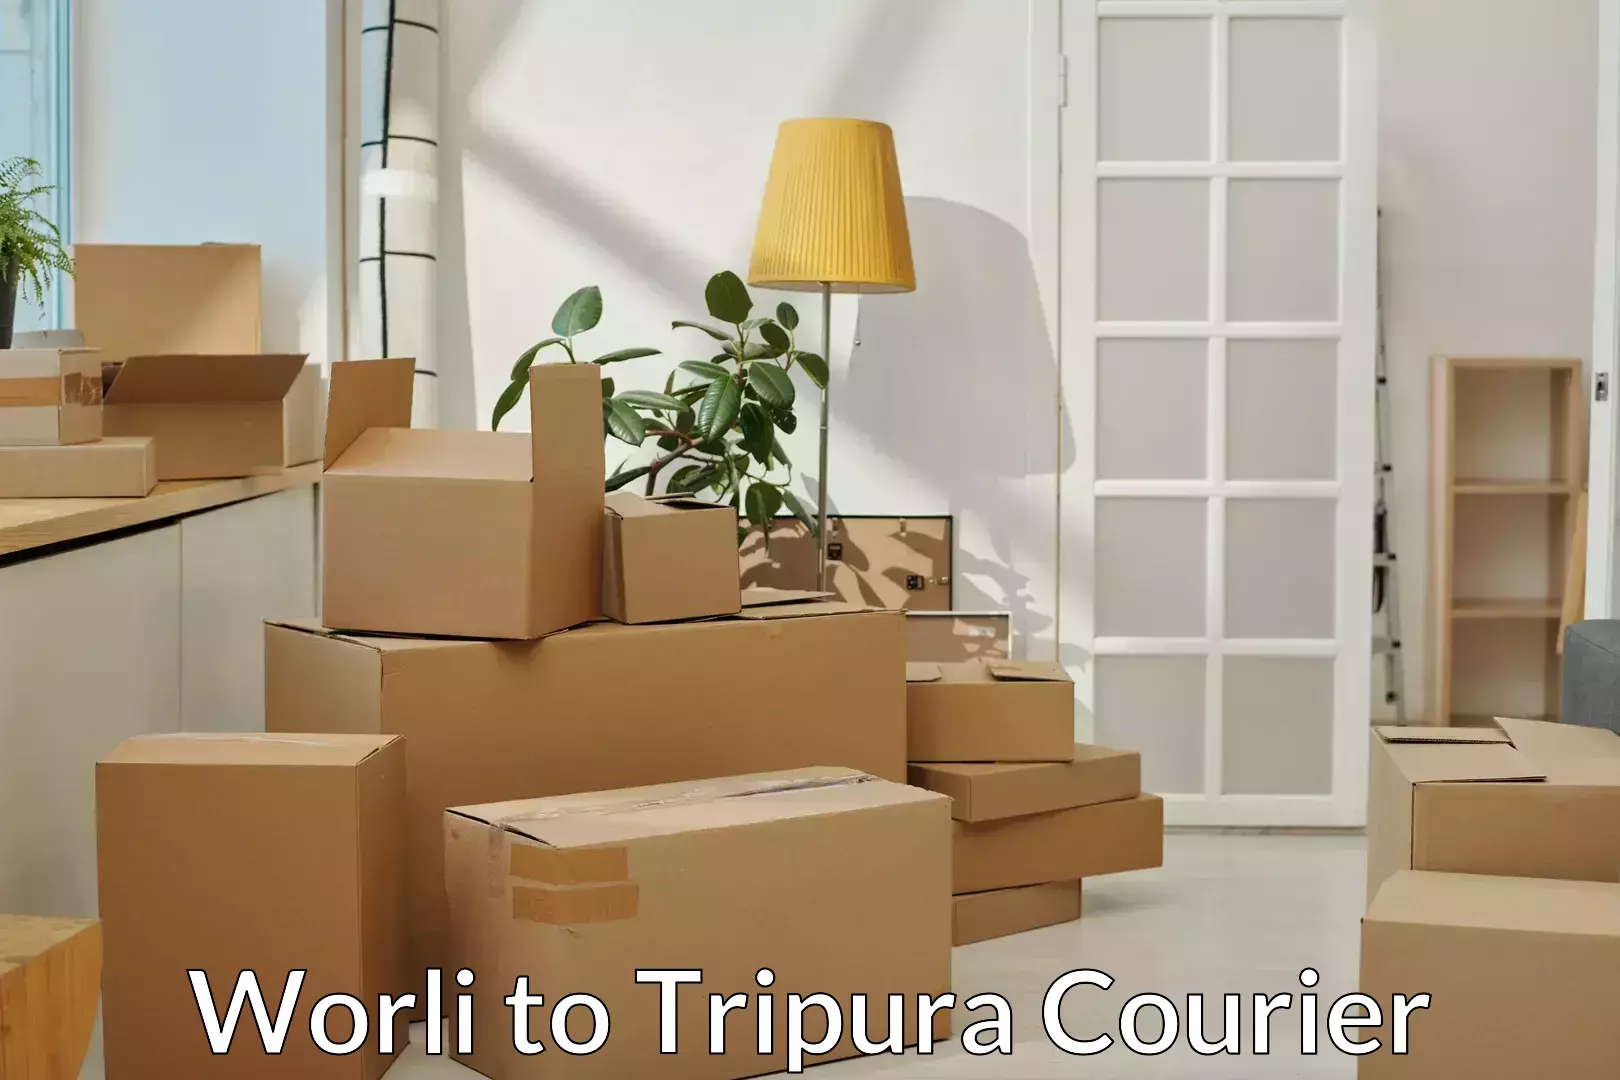 Household moving companies Worli to Udaipur Tripura